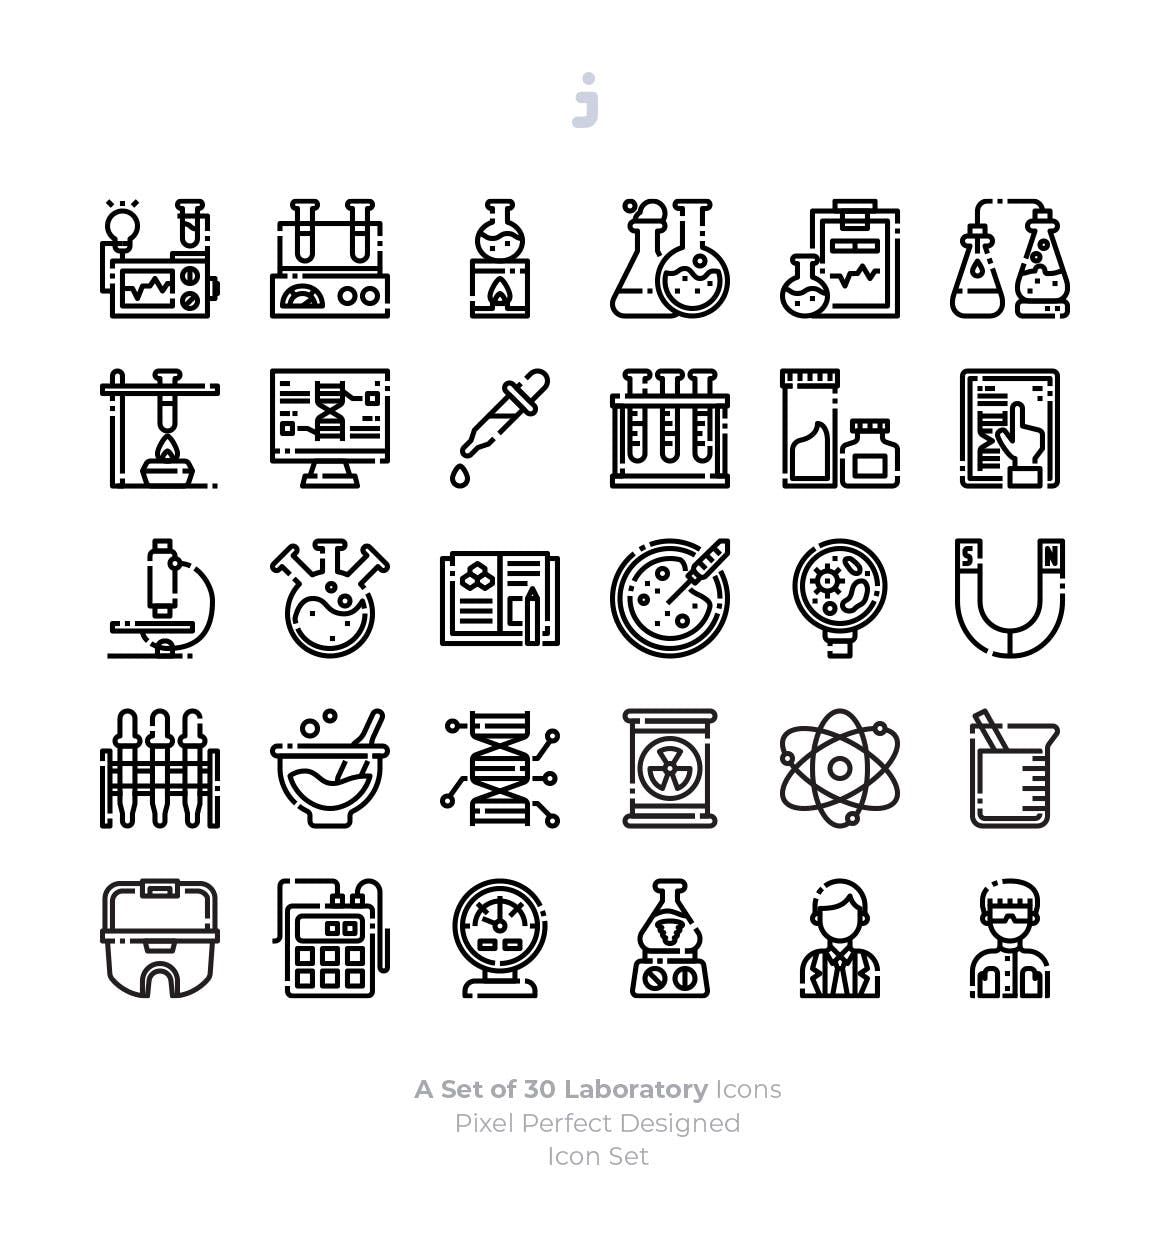  30实验室创意图标源文件下载30 Laboratory Icons插图2